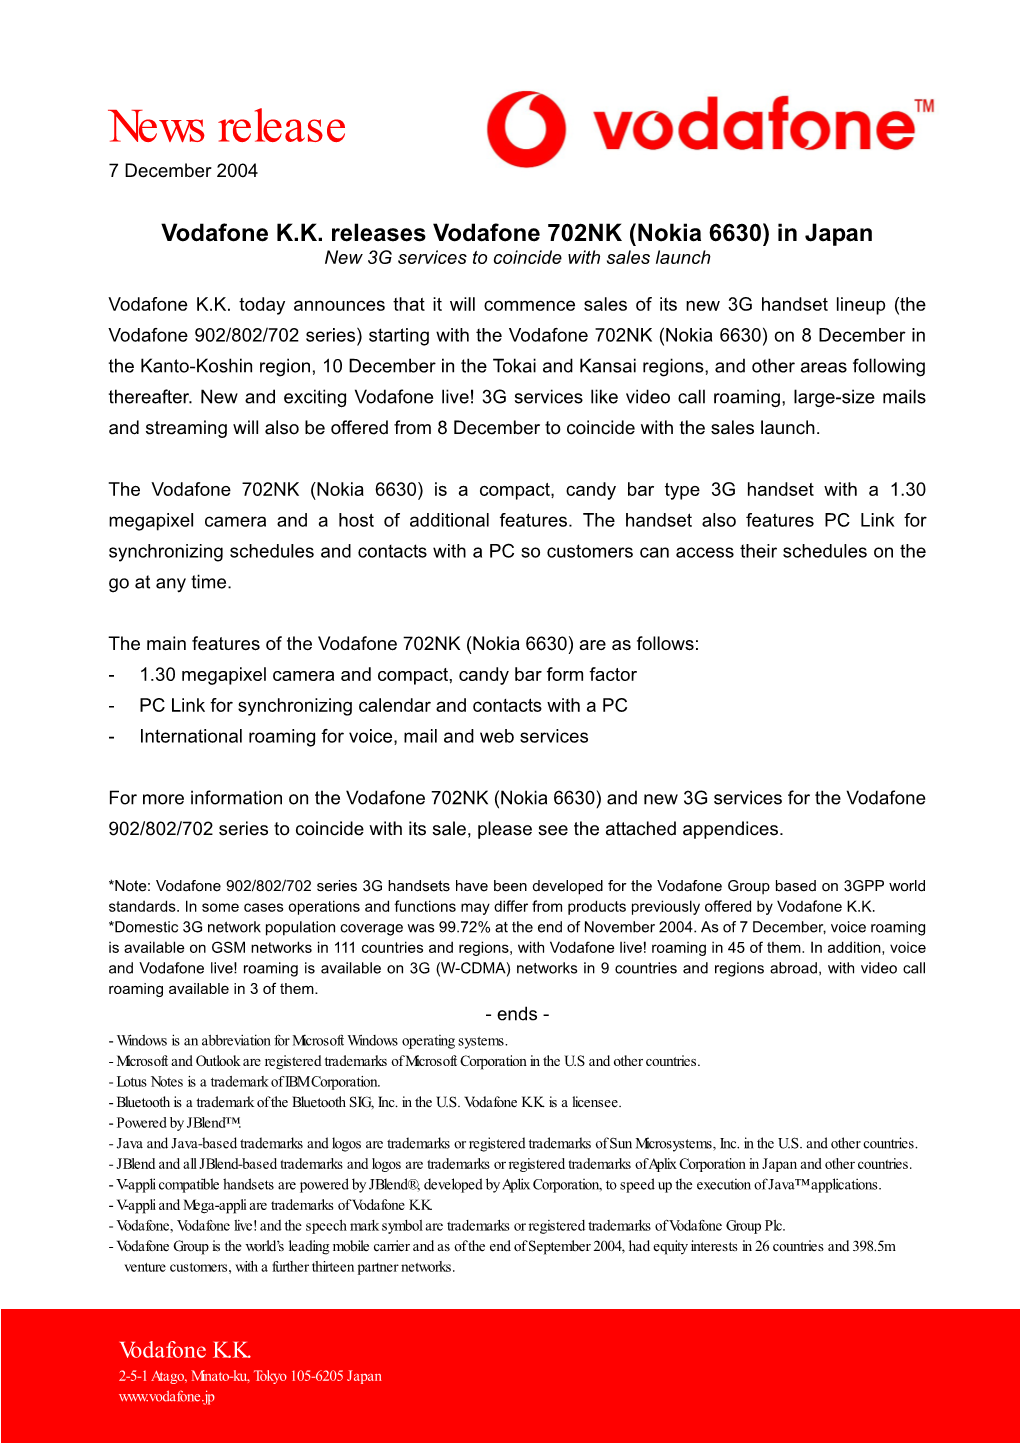 Vodafone KK Releases Vodafone 702NK (Nokia 6630) in Japan